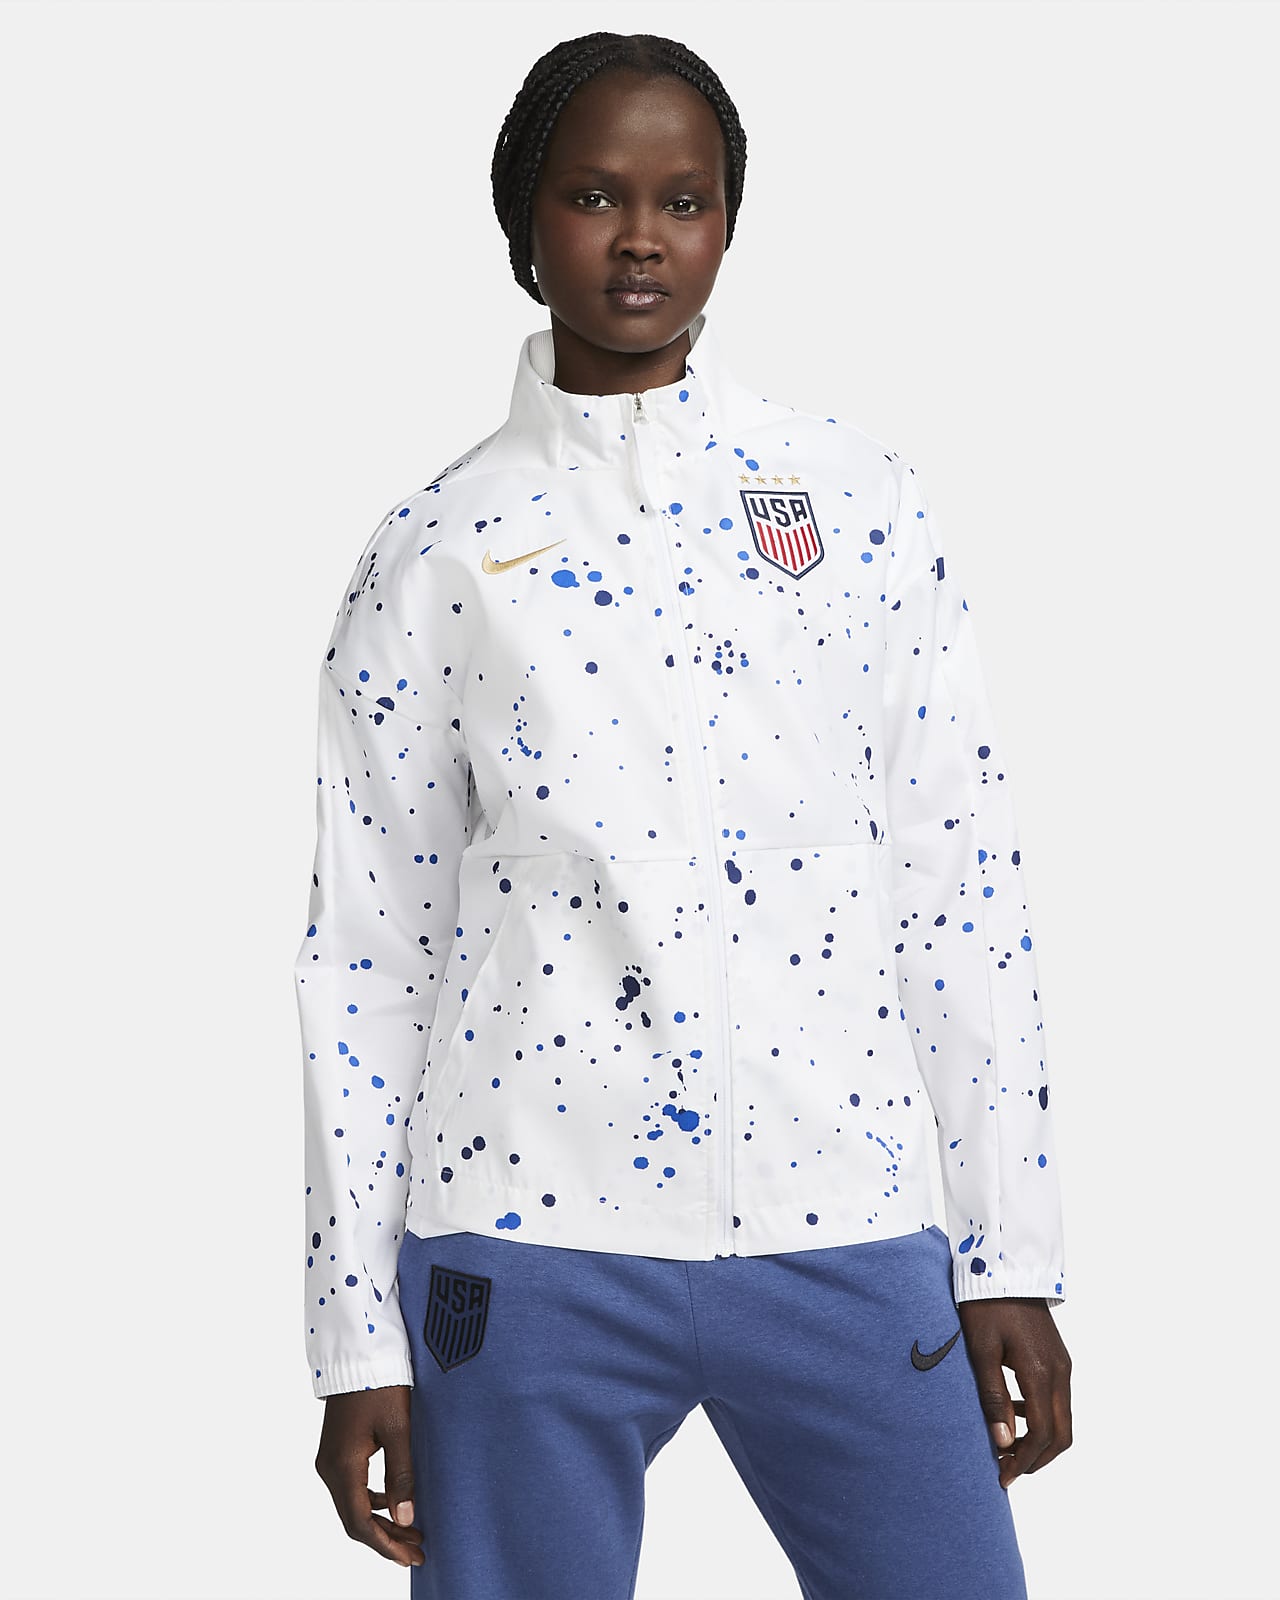 Women\'s U.S. Soccer Jacket. Nike Anthem Dri-FIT